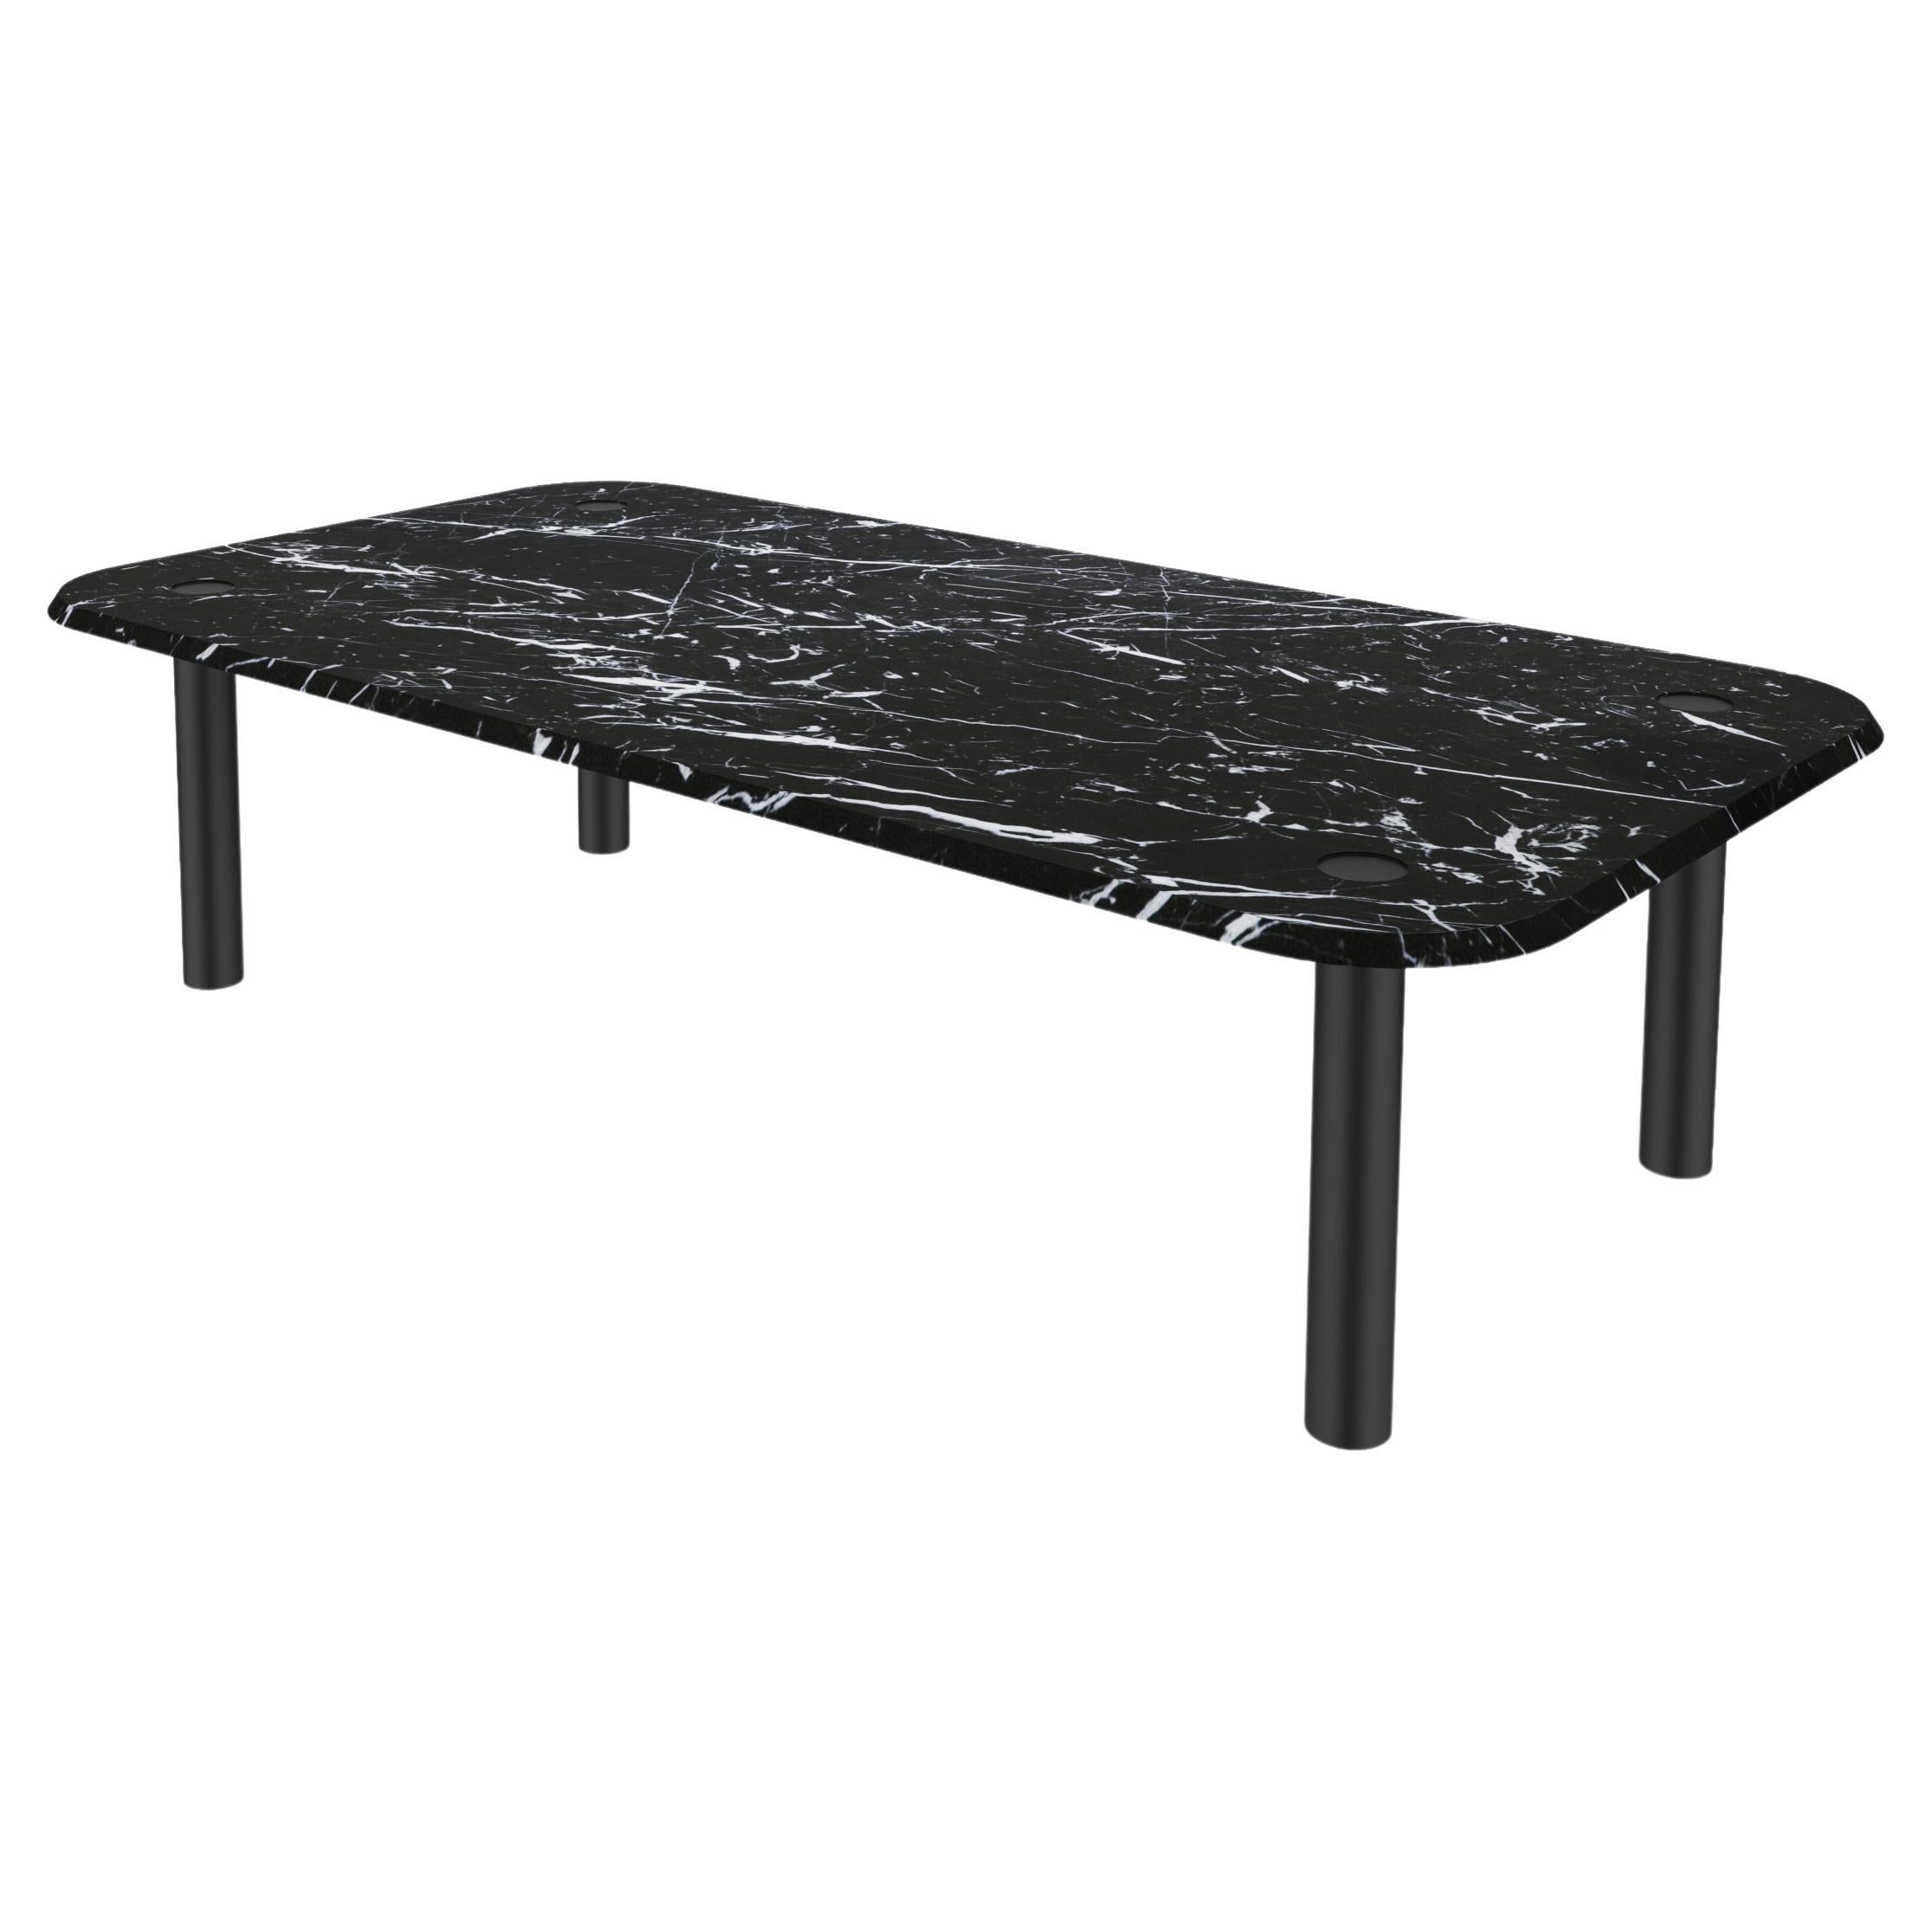 NORDST SEM Coffee Table, Italian Black Eagle Marble, Danish Modern Design, New